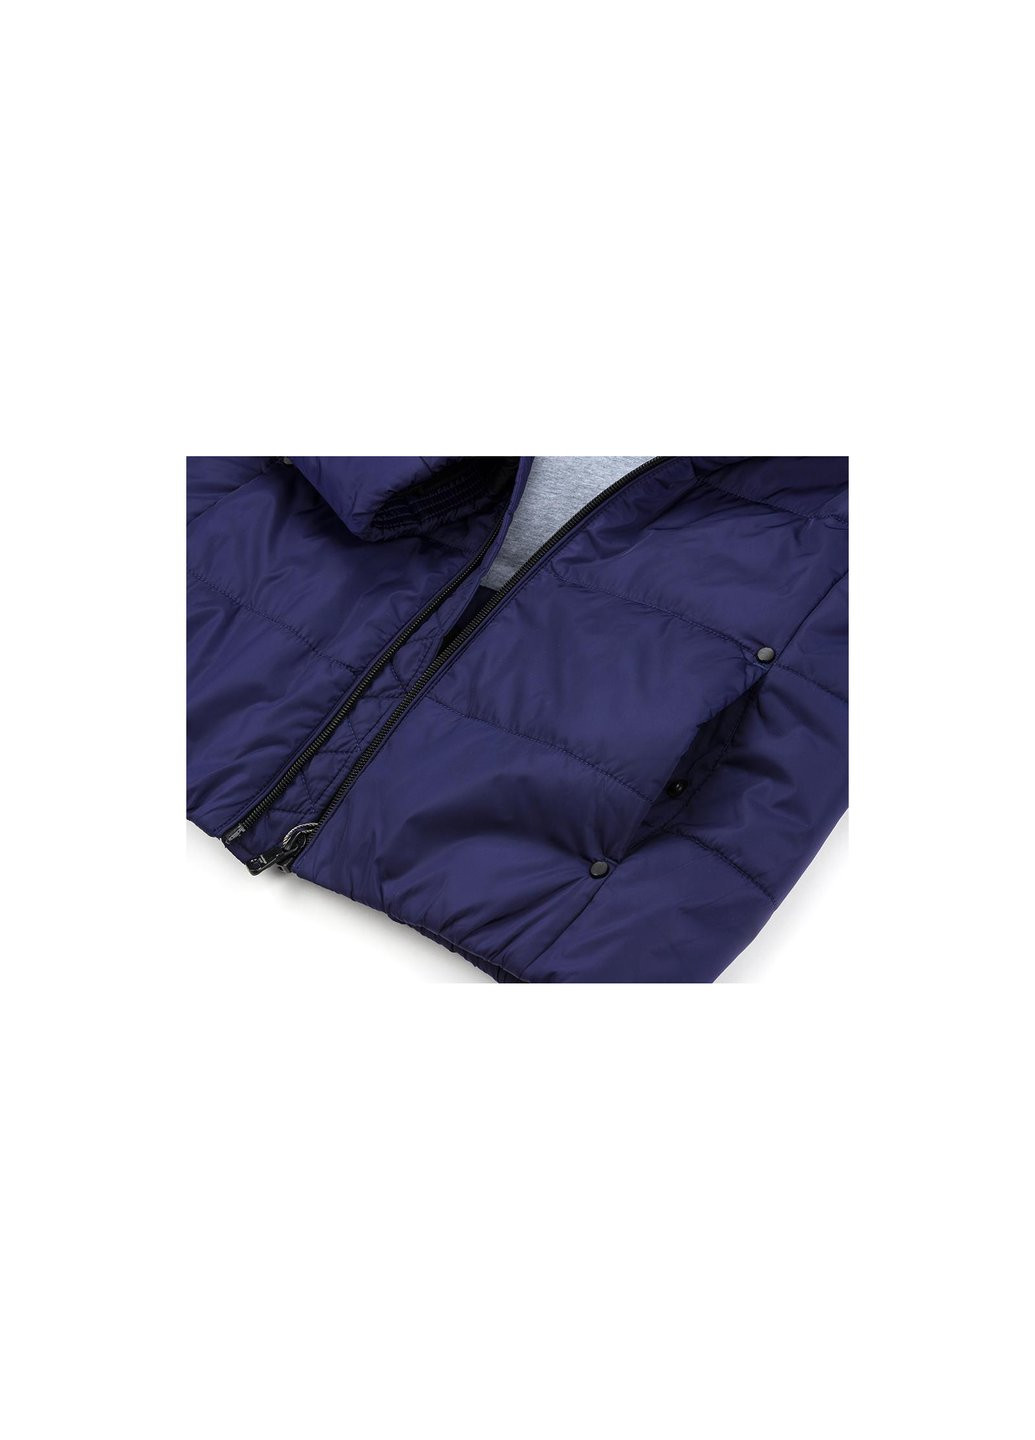 Блакитна демісезонна куртка з капюшоном (sicmy-g306-122b-blue) Snowimage